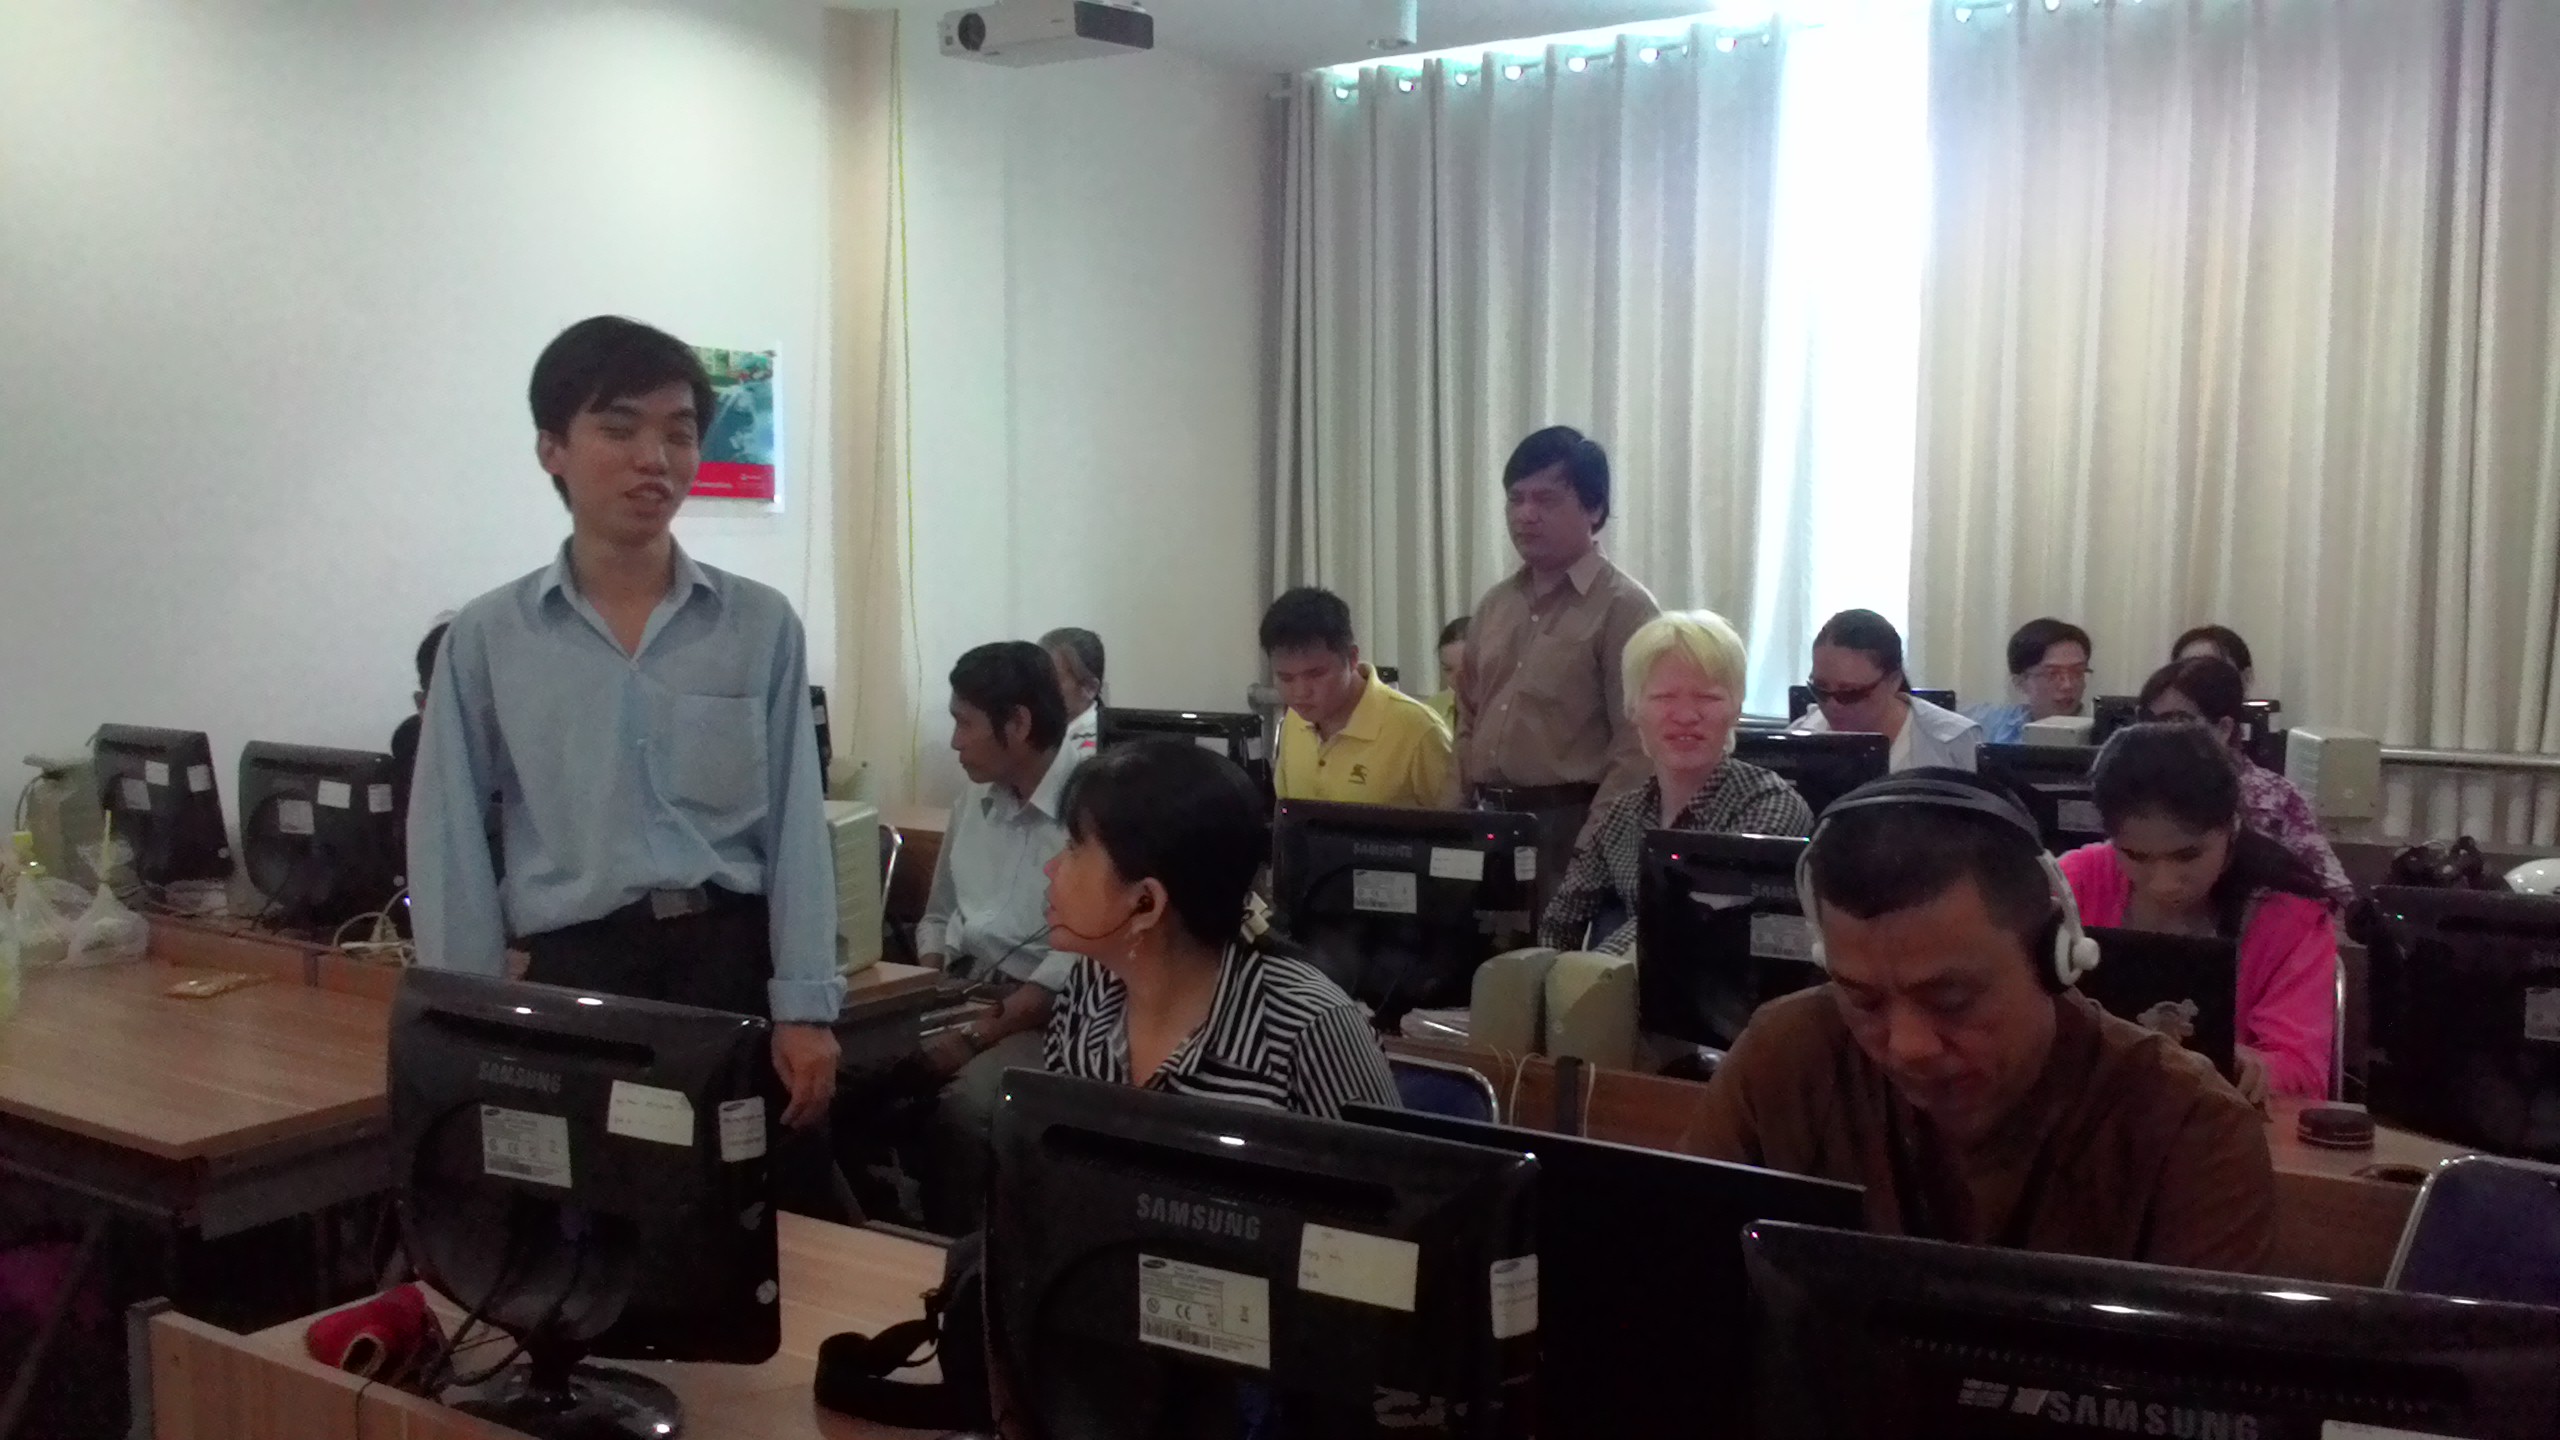 Cuong tutoring adults students